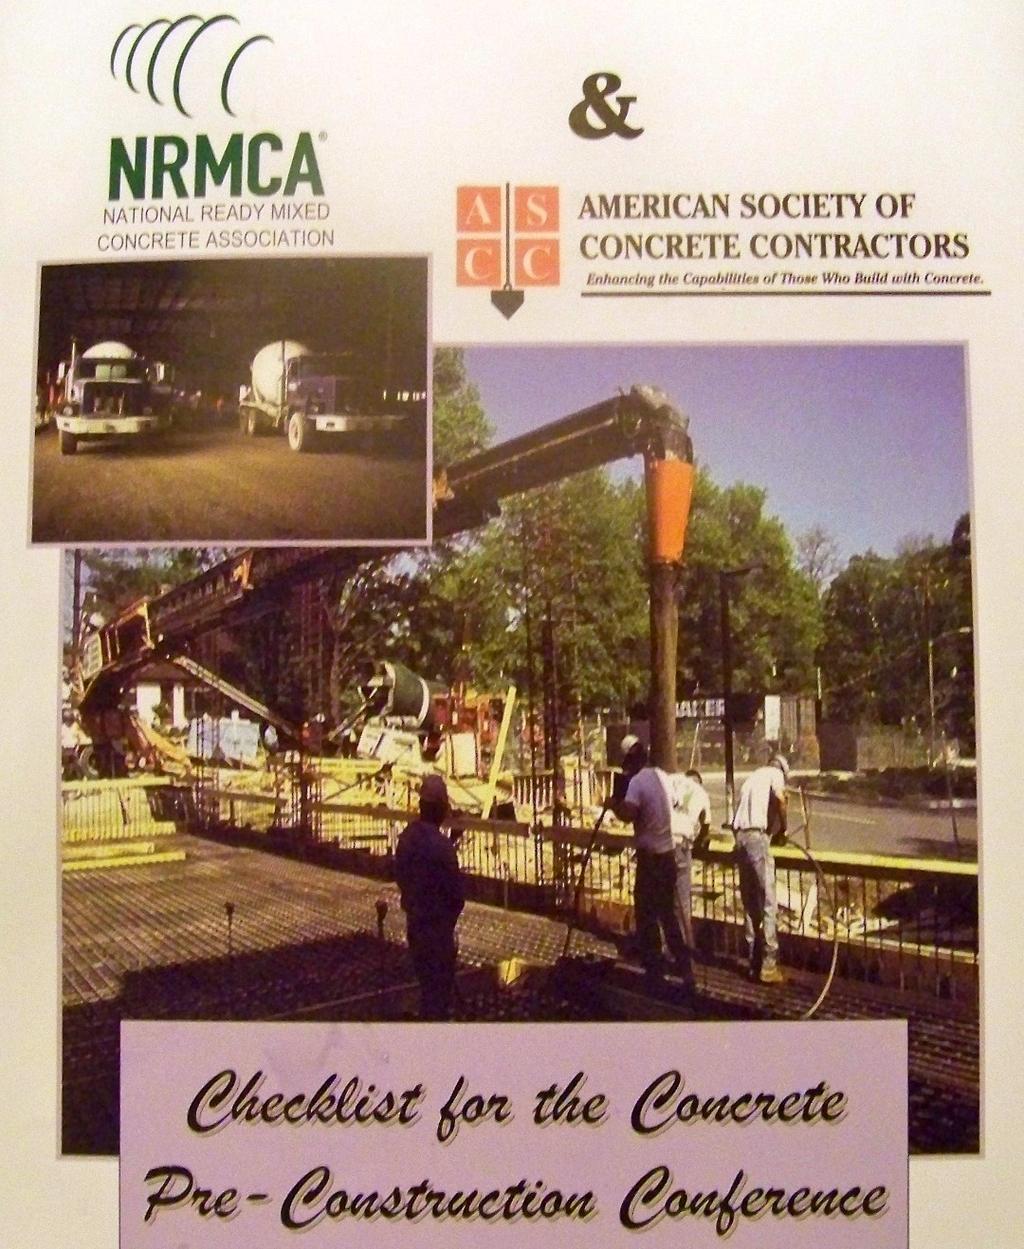 National Ready Mixed Concrete Association www.nrmca.